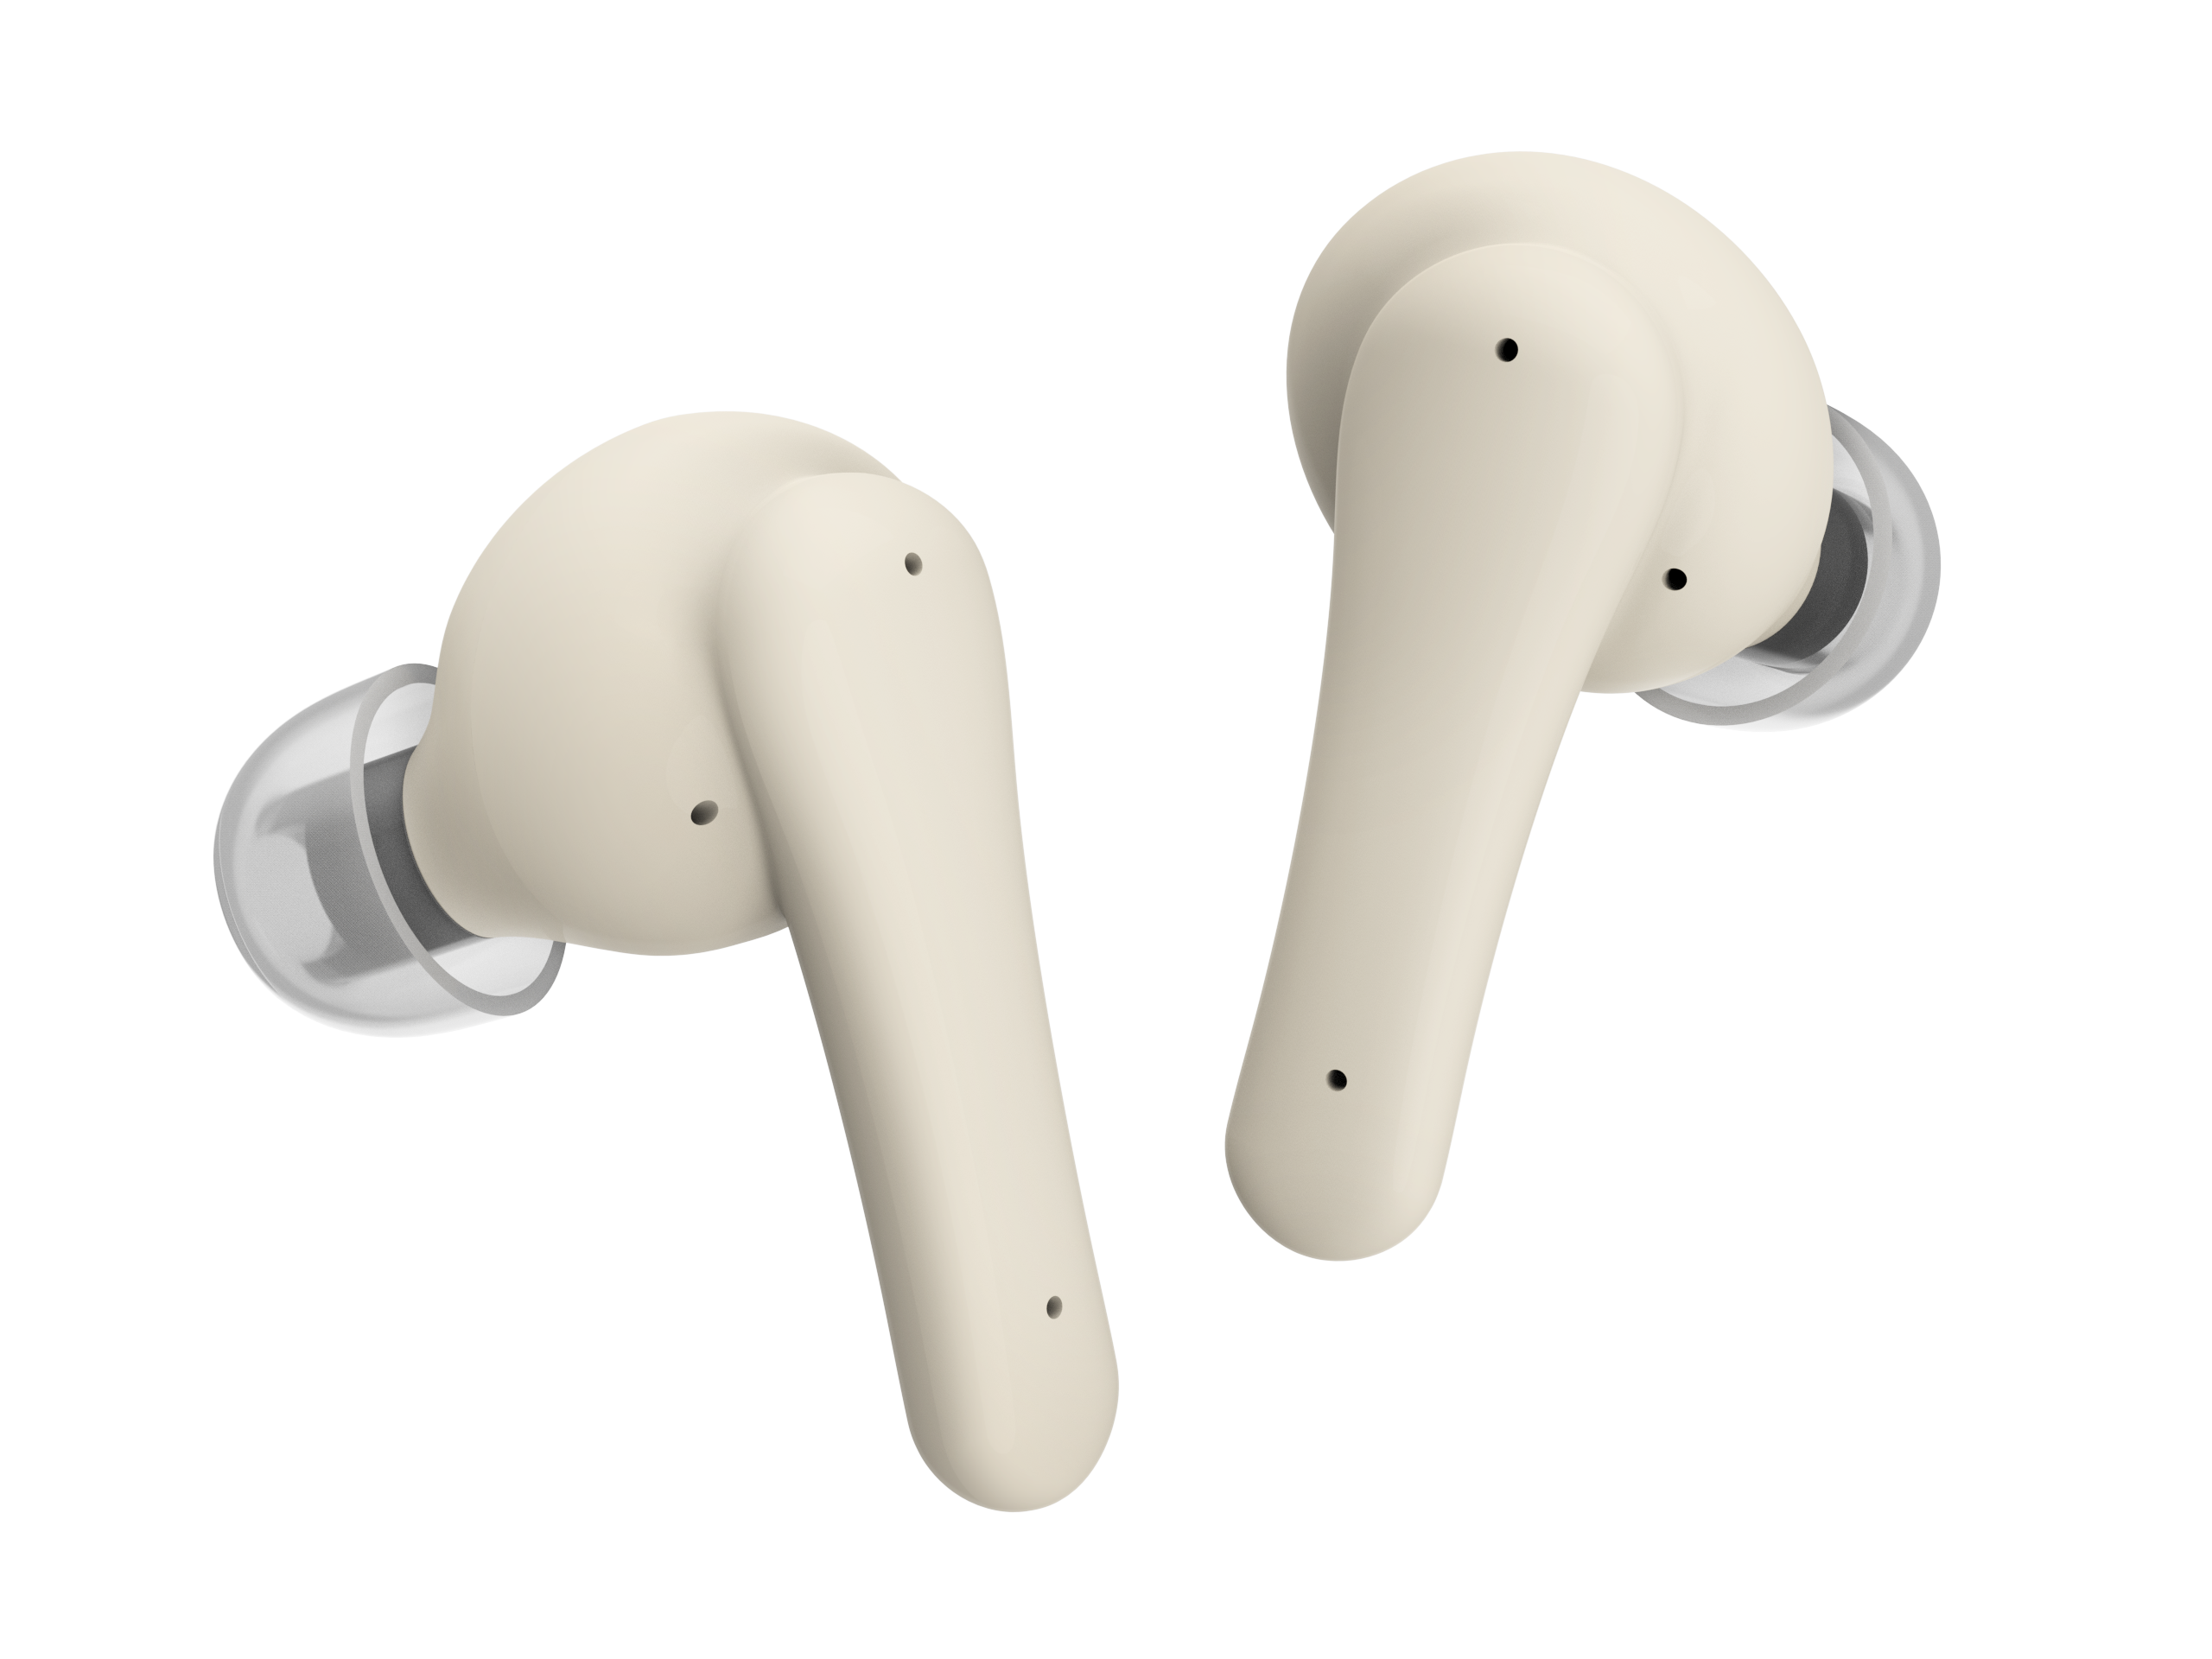 HEAR SE
Smart Wireless OTC Hearing Aid